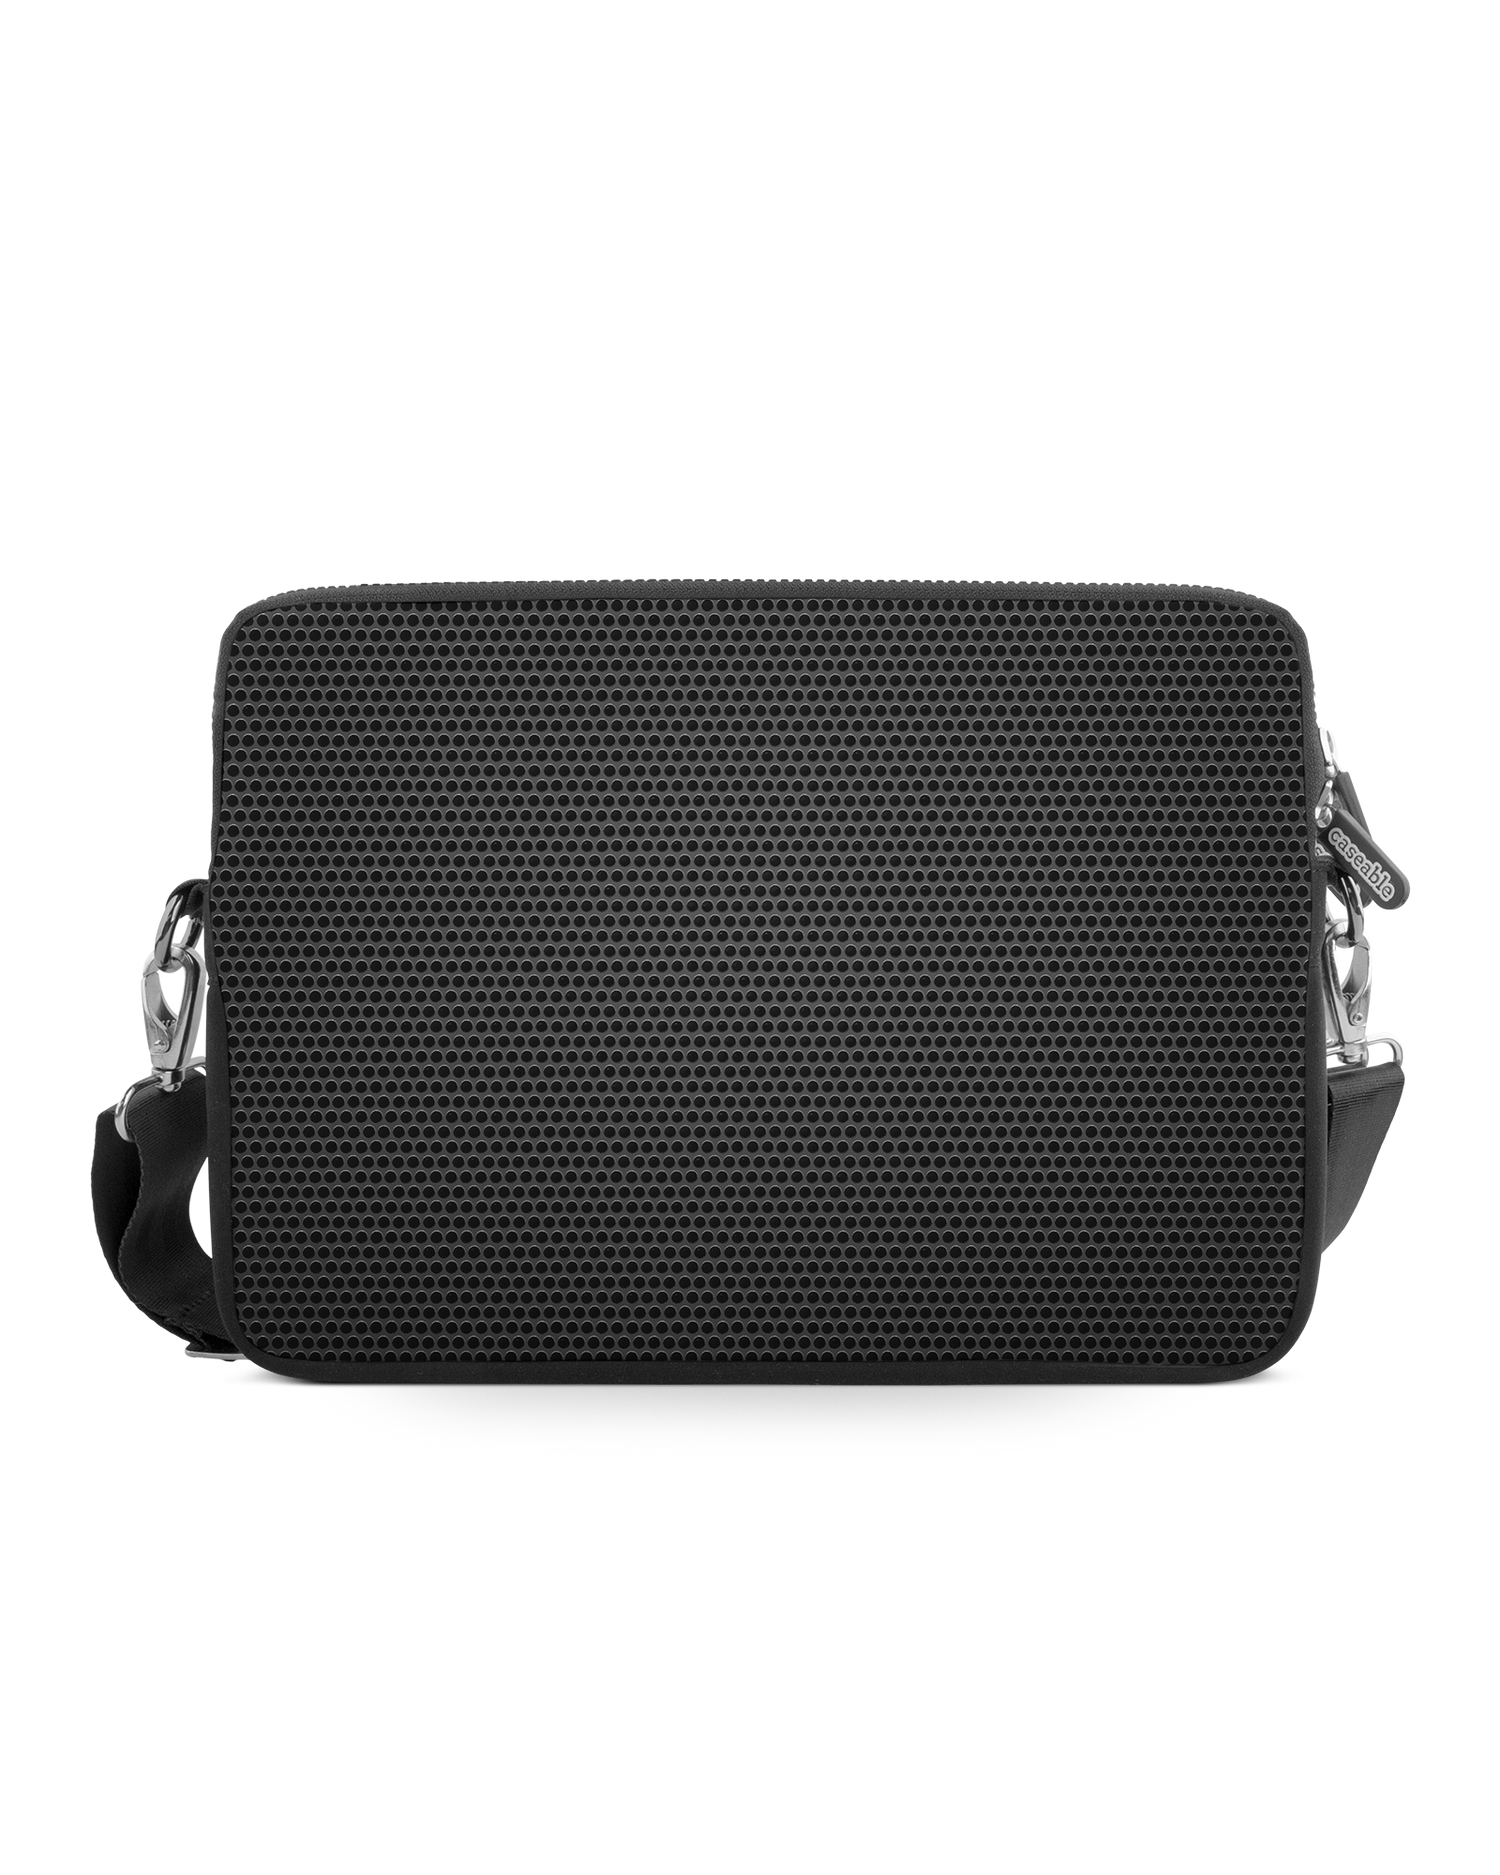 Carbon II Premium Laptop Bag 13-14 inch: Front View